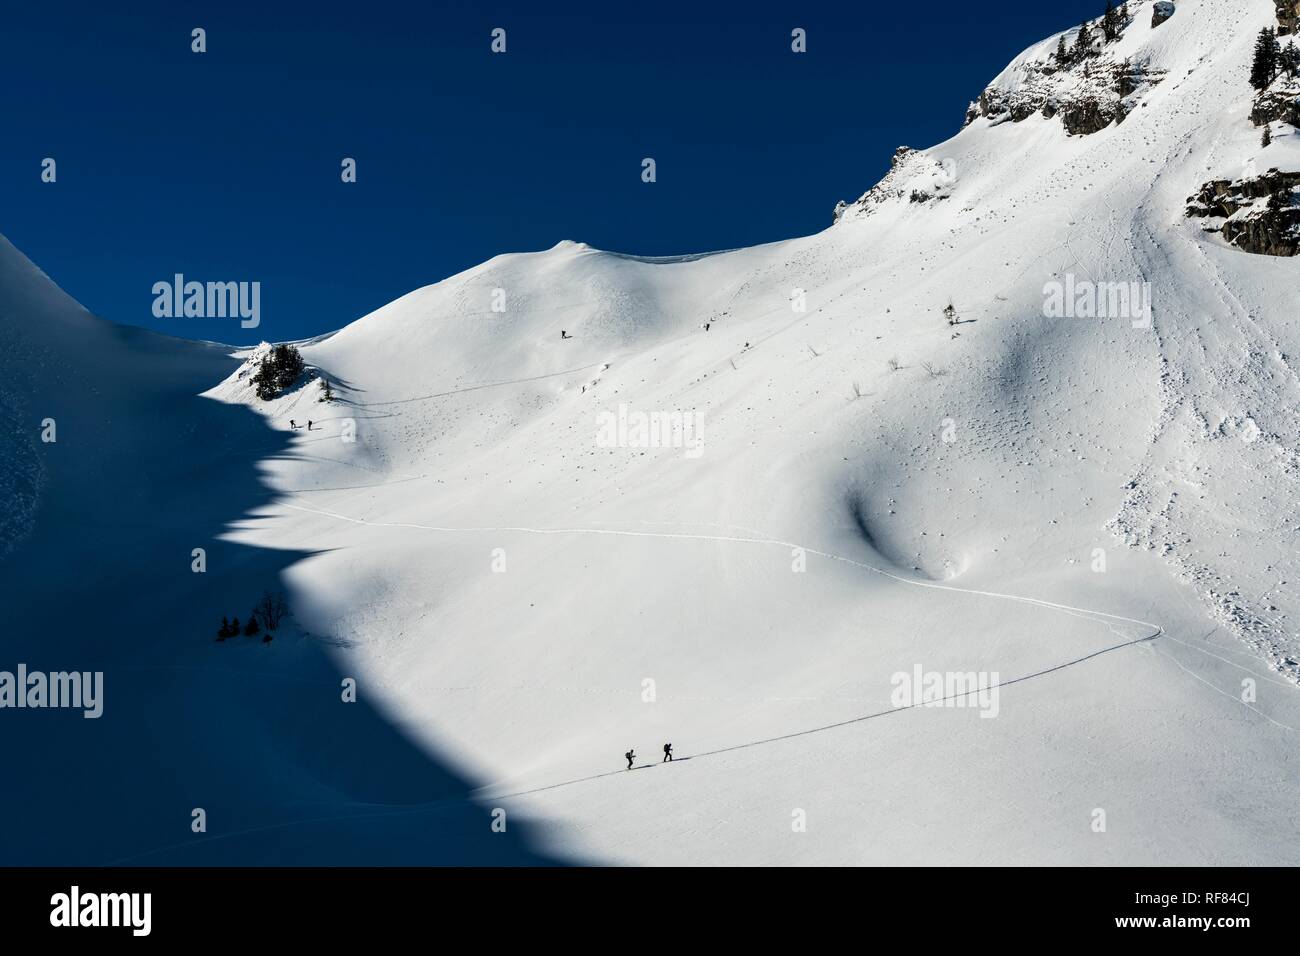 Ski tourers in ascent, avalanche, Reutte, Außerfern, Tyrol, Austria Stock Photo